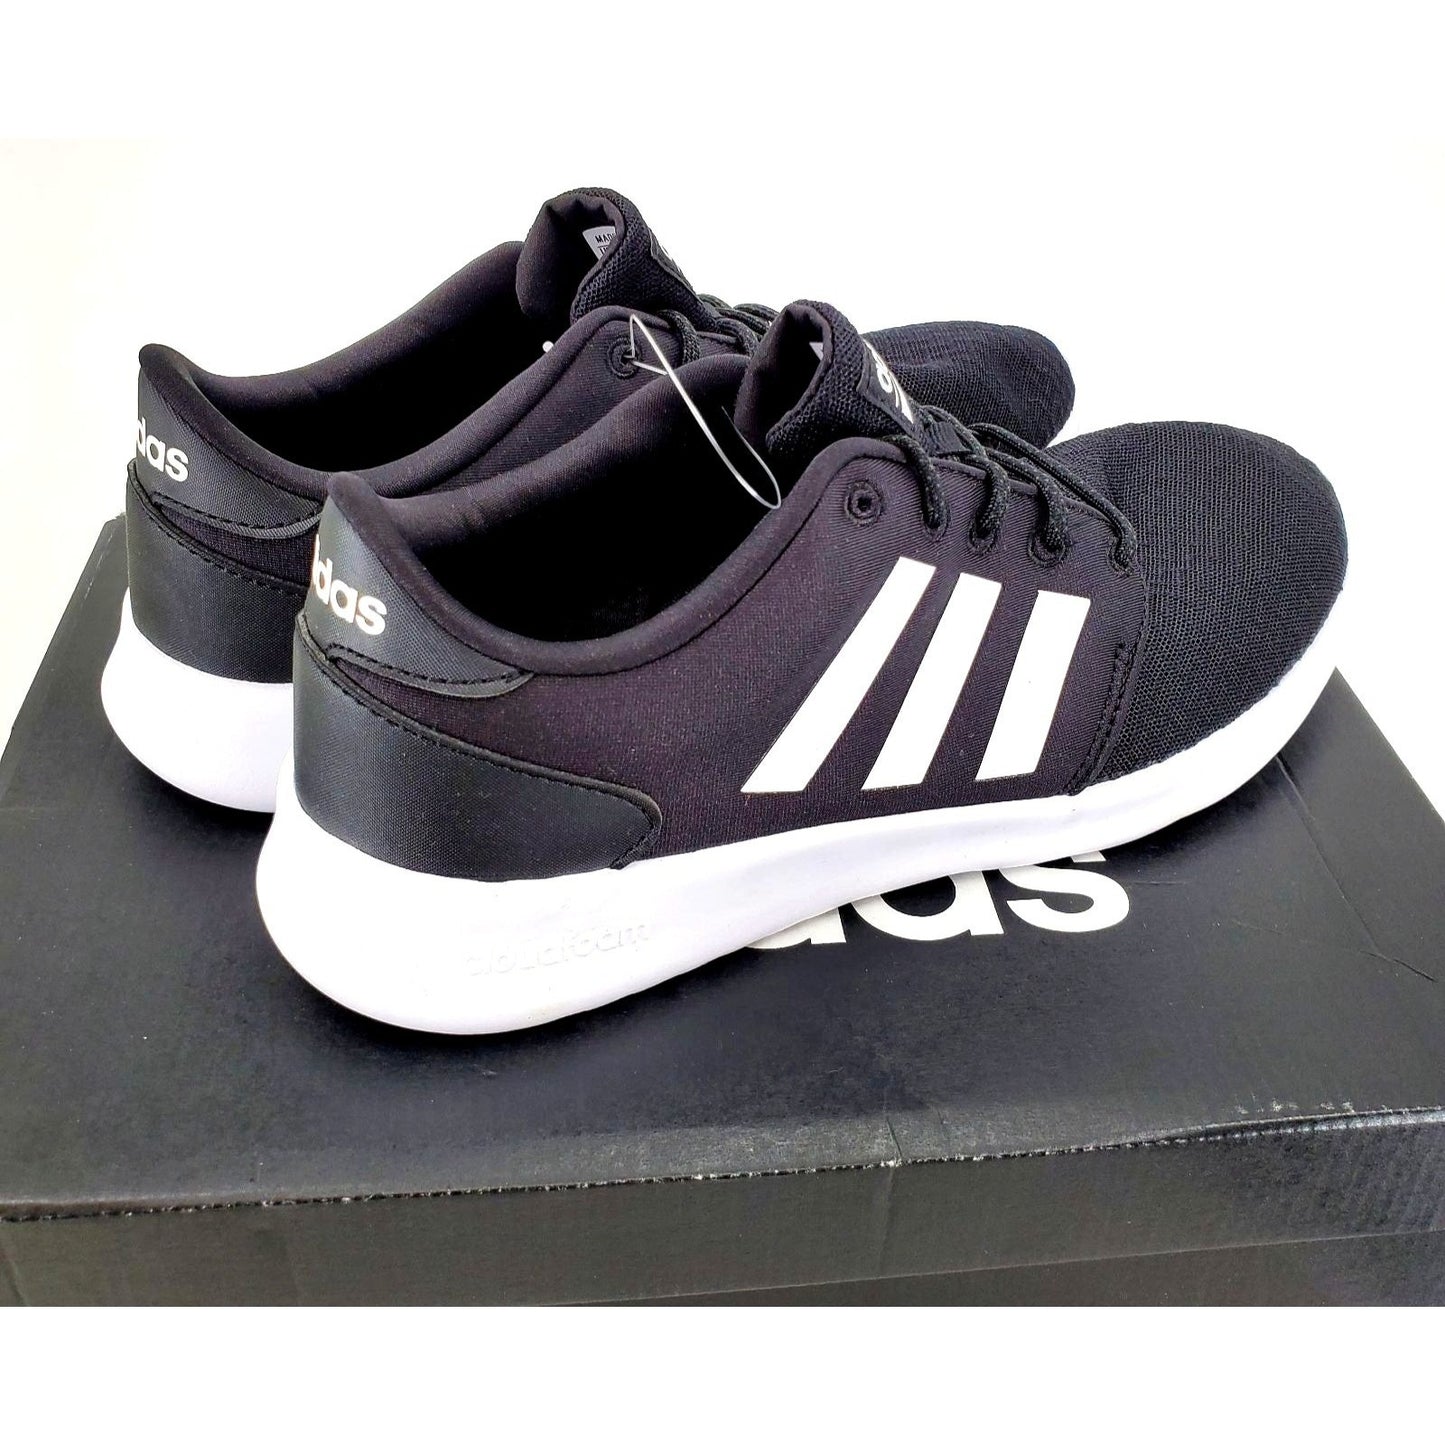 ADIDAS Sneakers Woman’s Cloudfoam QT Racer Black Classic shoes